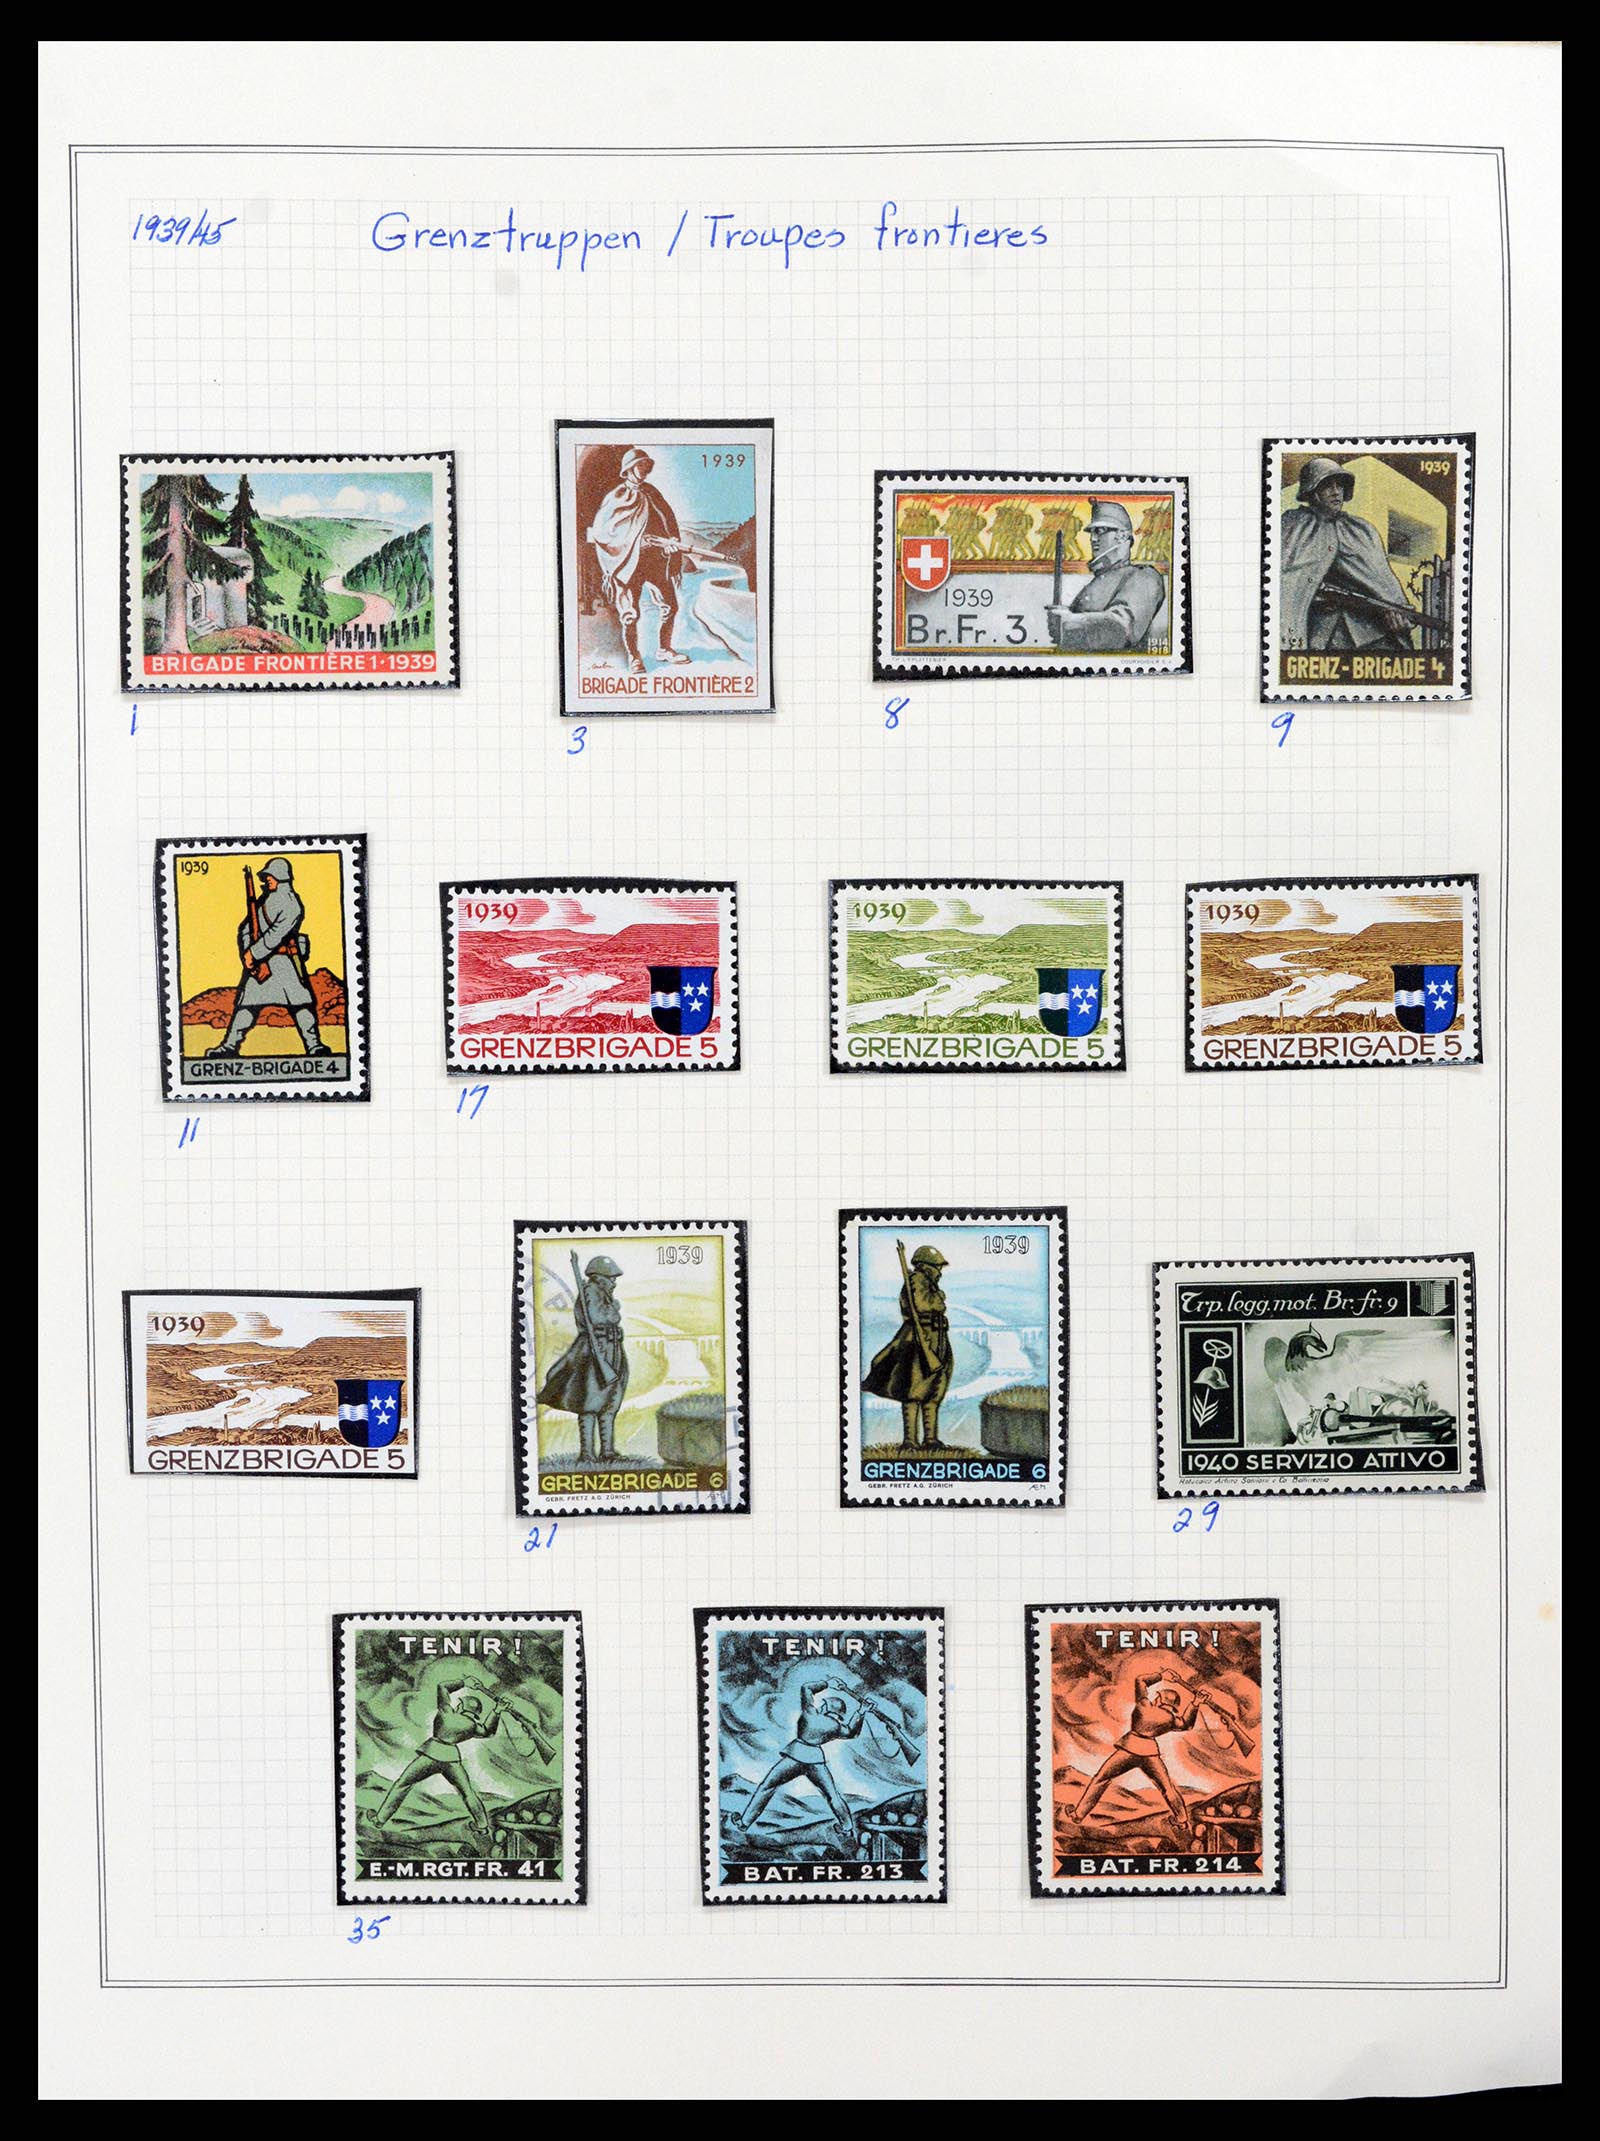 37642 024 - Stamp collection 37642 Switzerland soldier stamps 1914-1945.